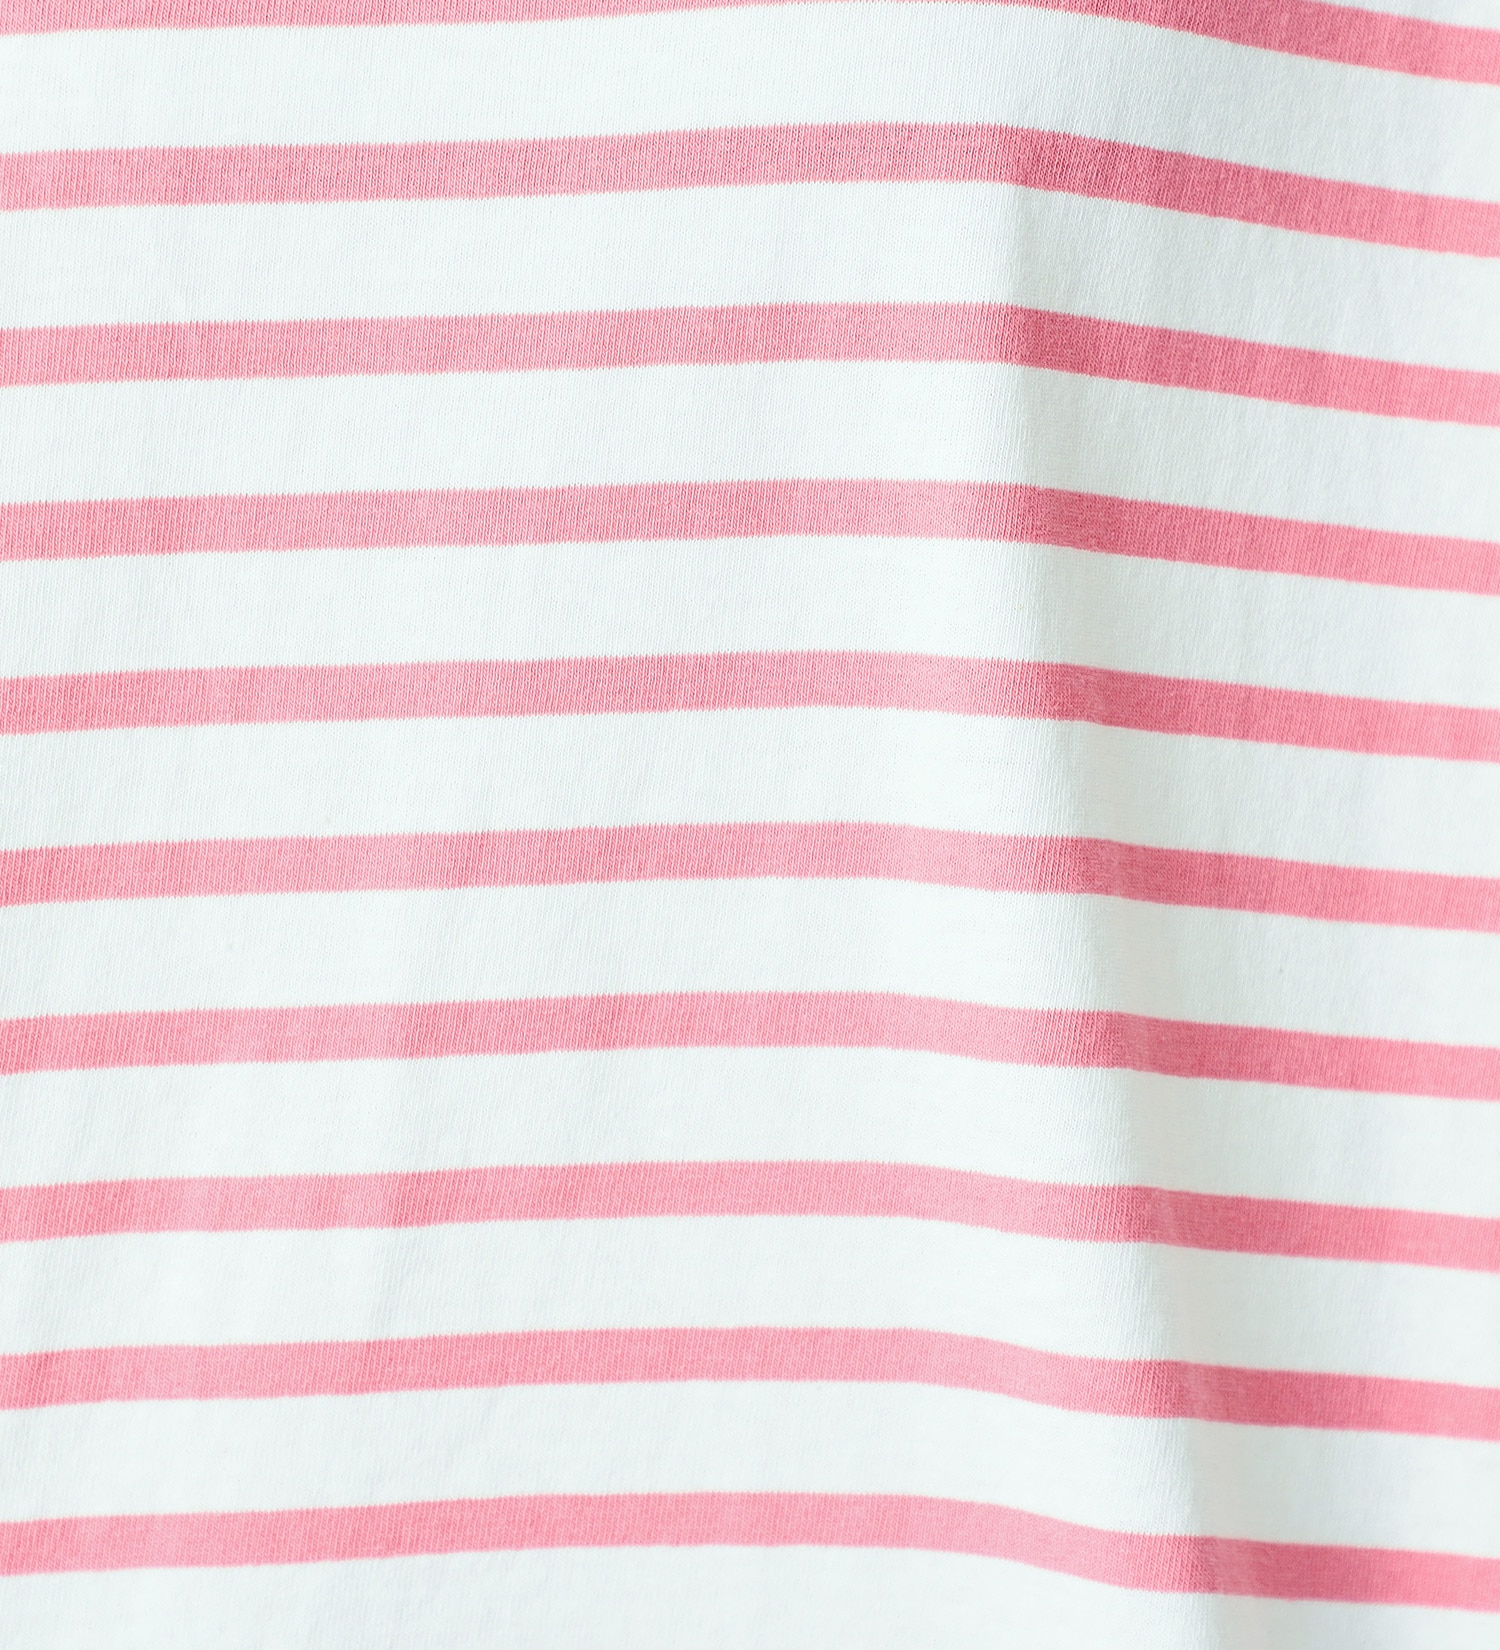 SOMETHING(サムシング)のSOMETHING バスクシャツ/長袖ボーダーカットソー|トップス/Tシャツ/カットソー/レディース|ピンク